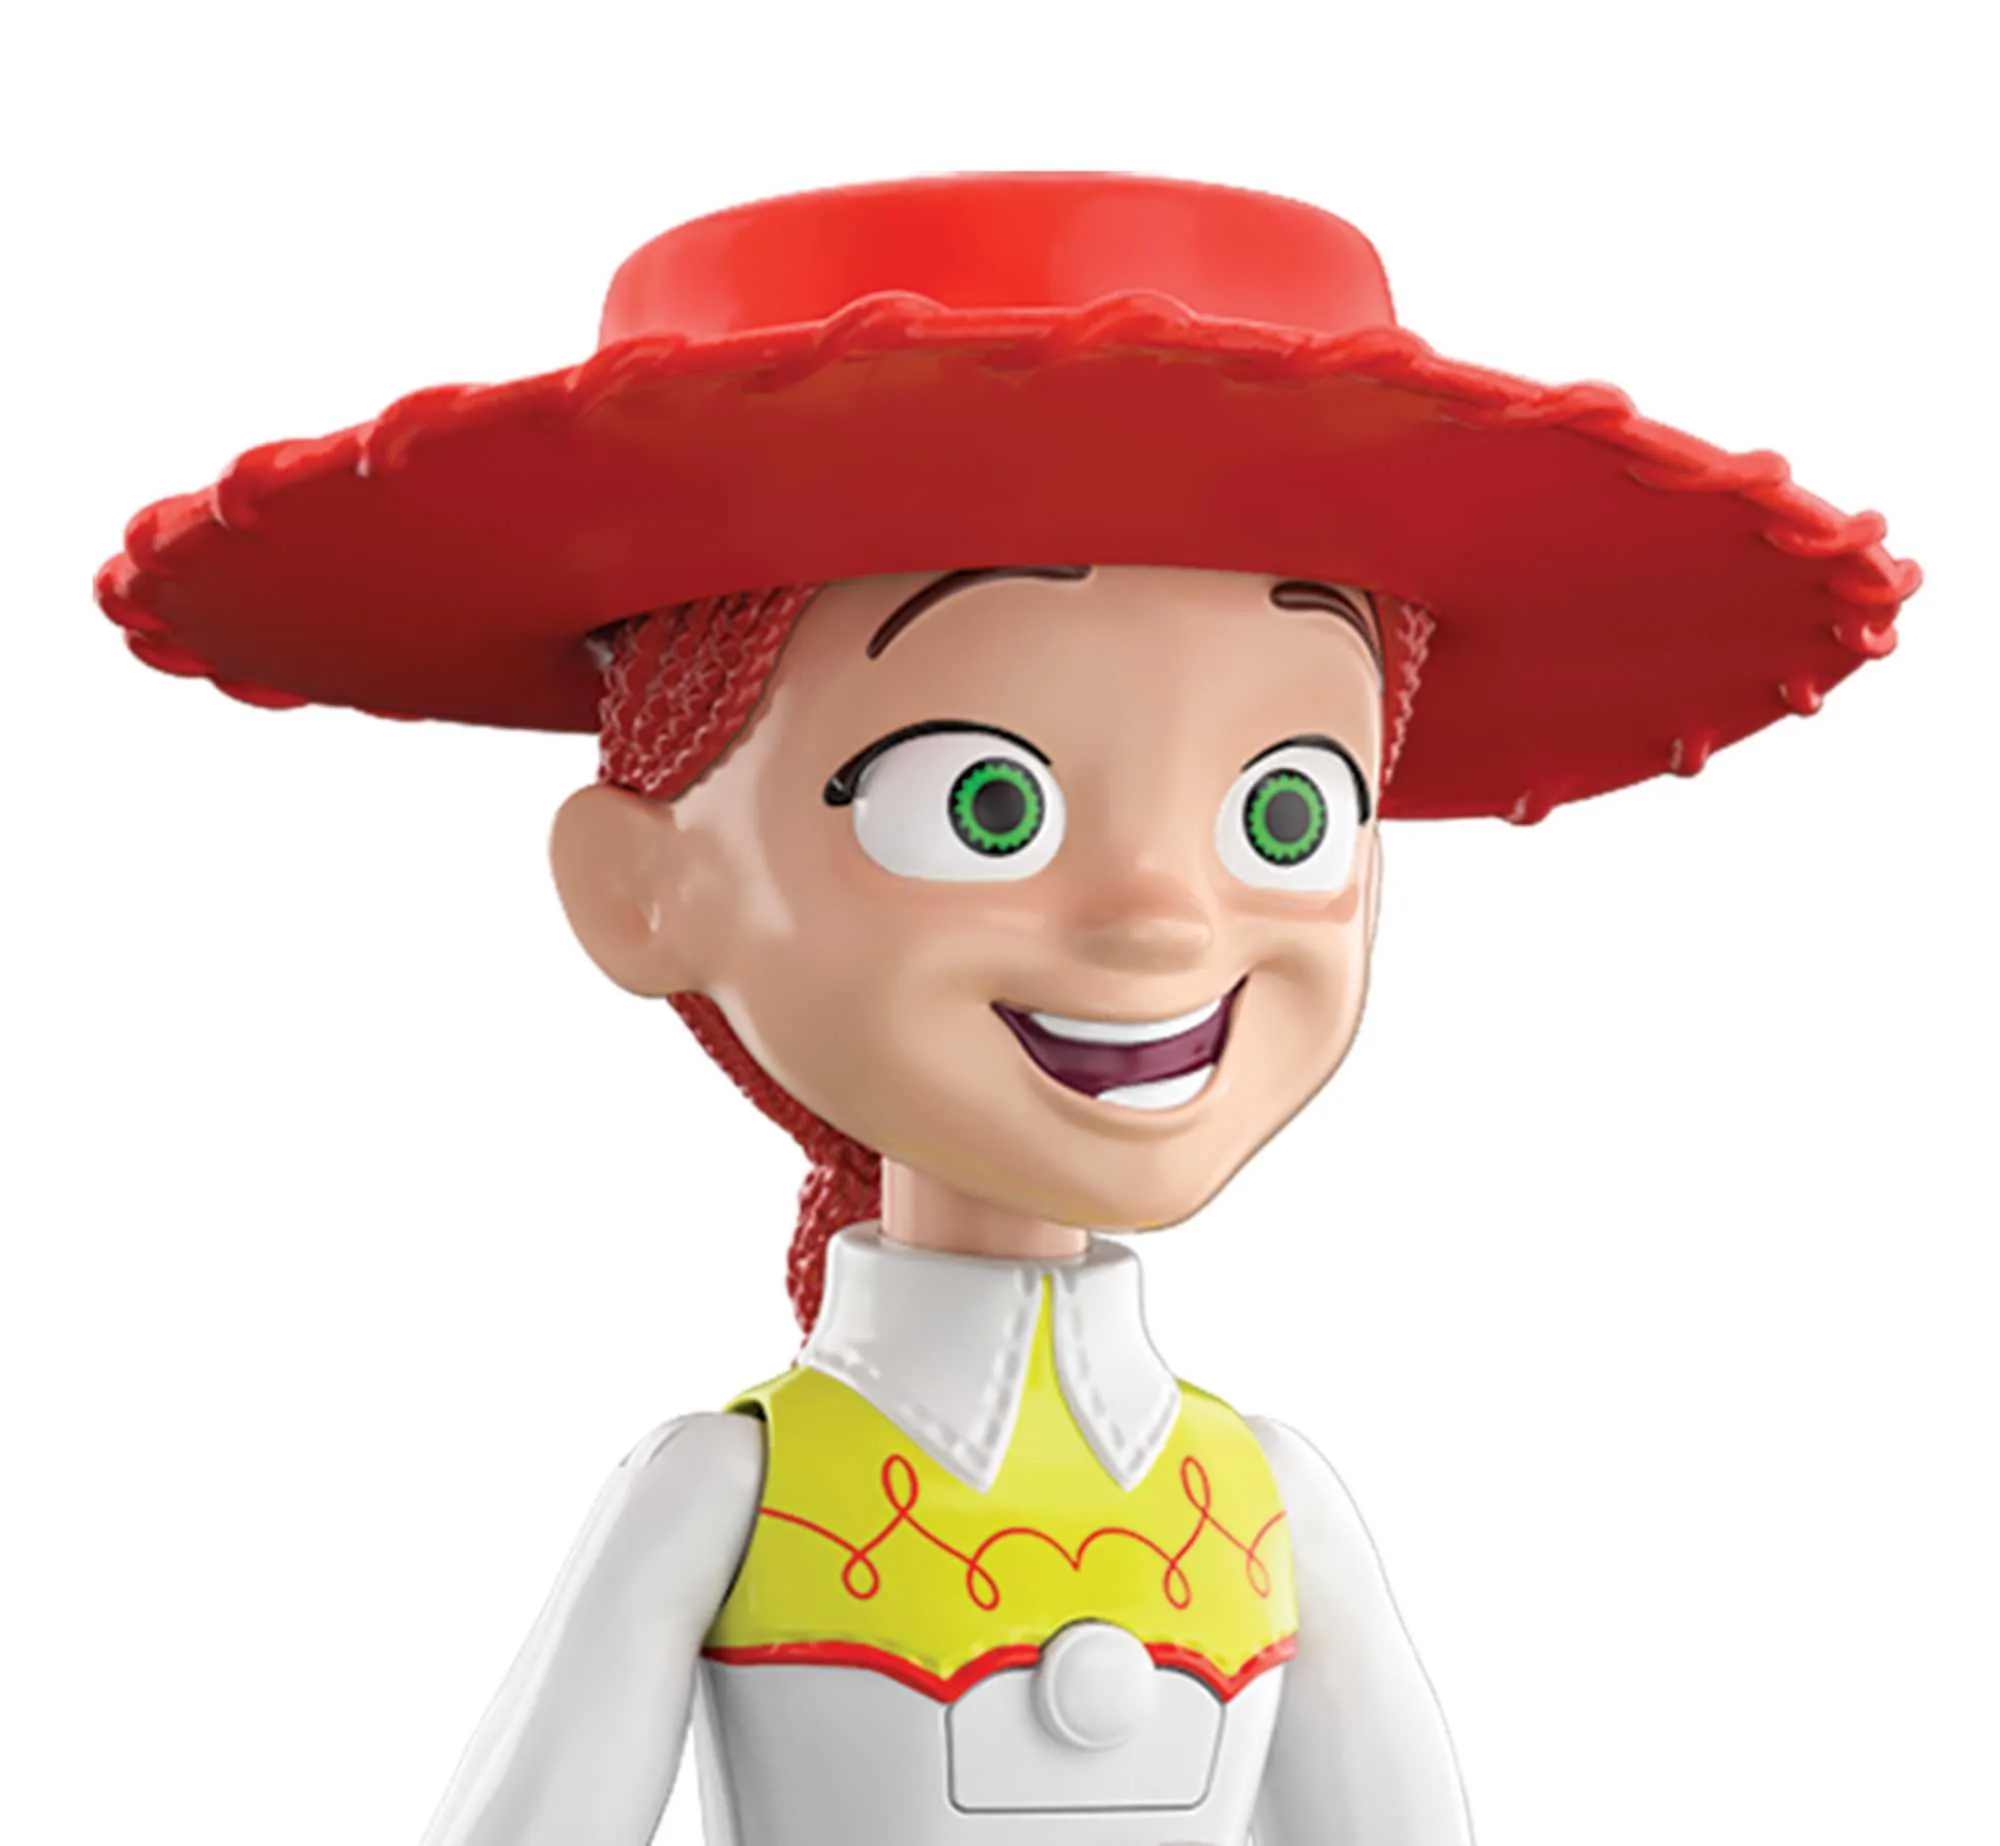 Disney Pixar Toy Story Figura de Juguete Interactiva de Jessie